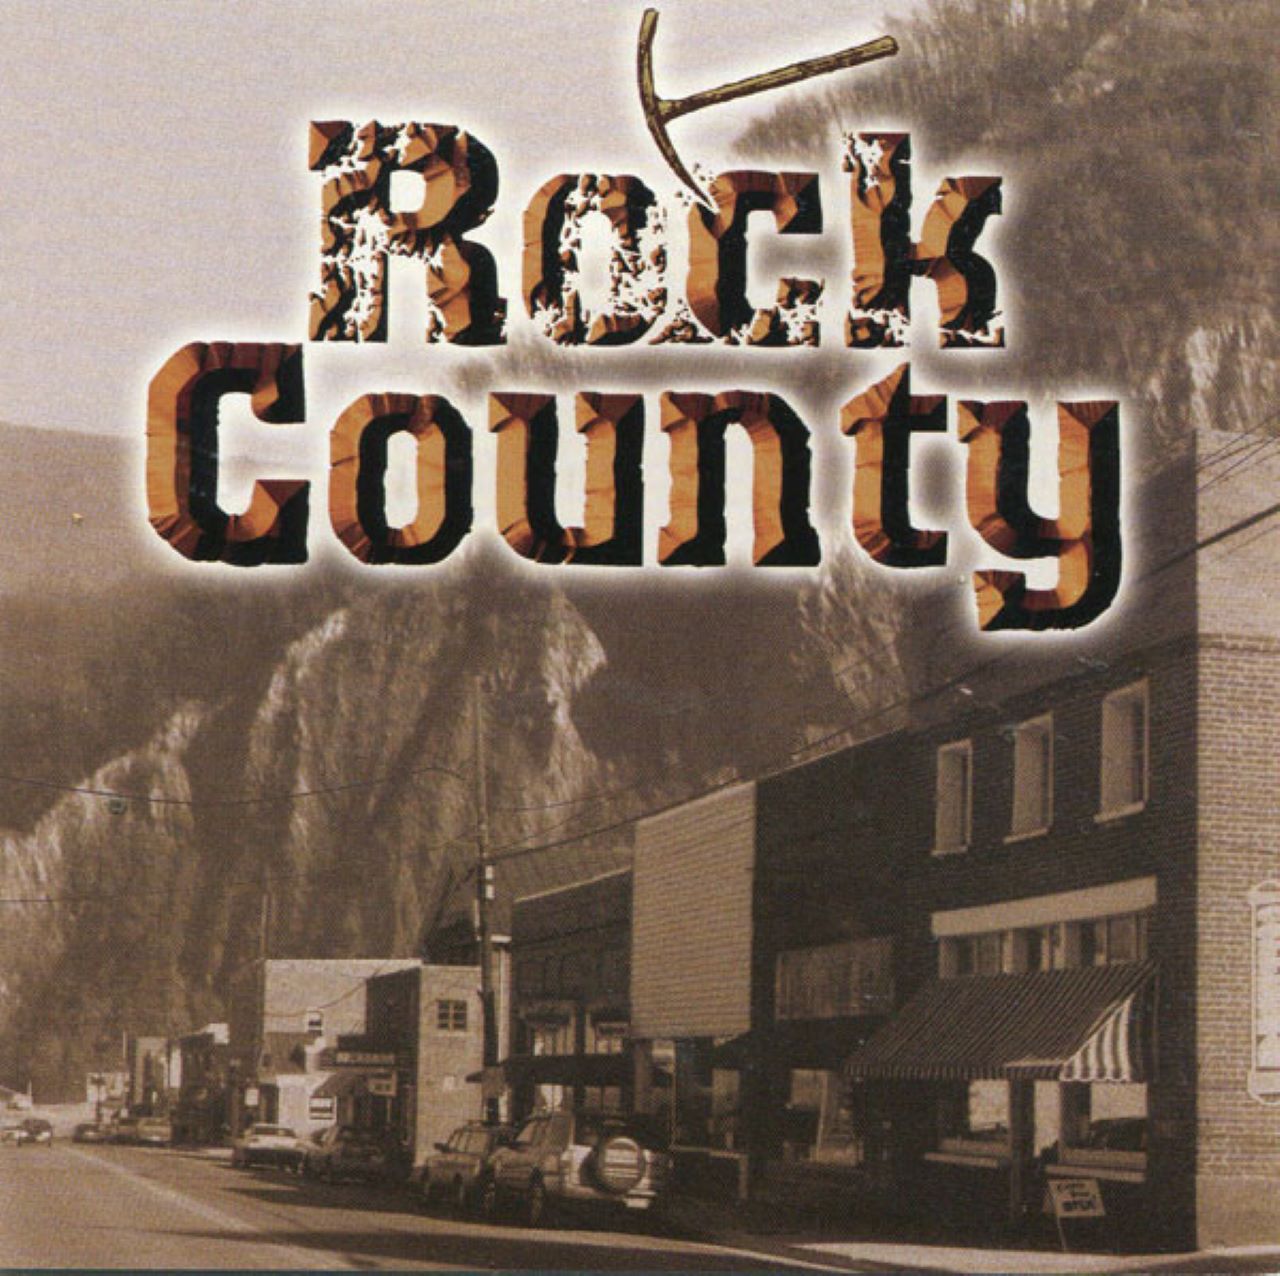 Rock County - Rock County cover album